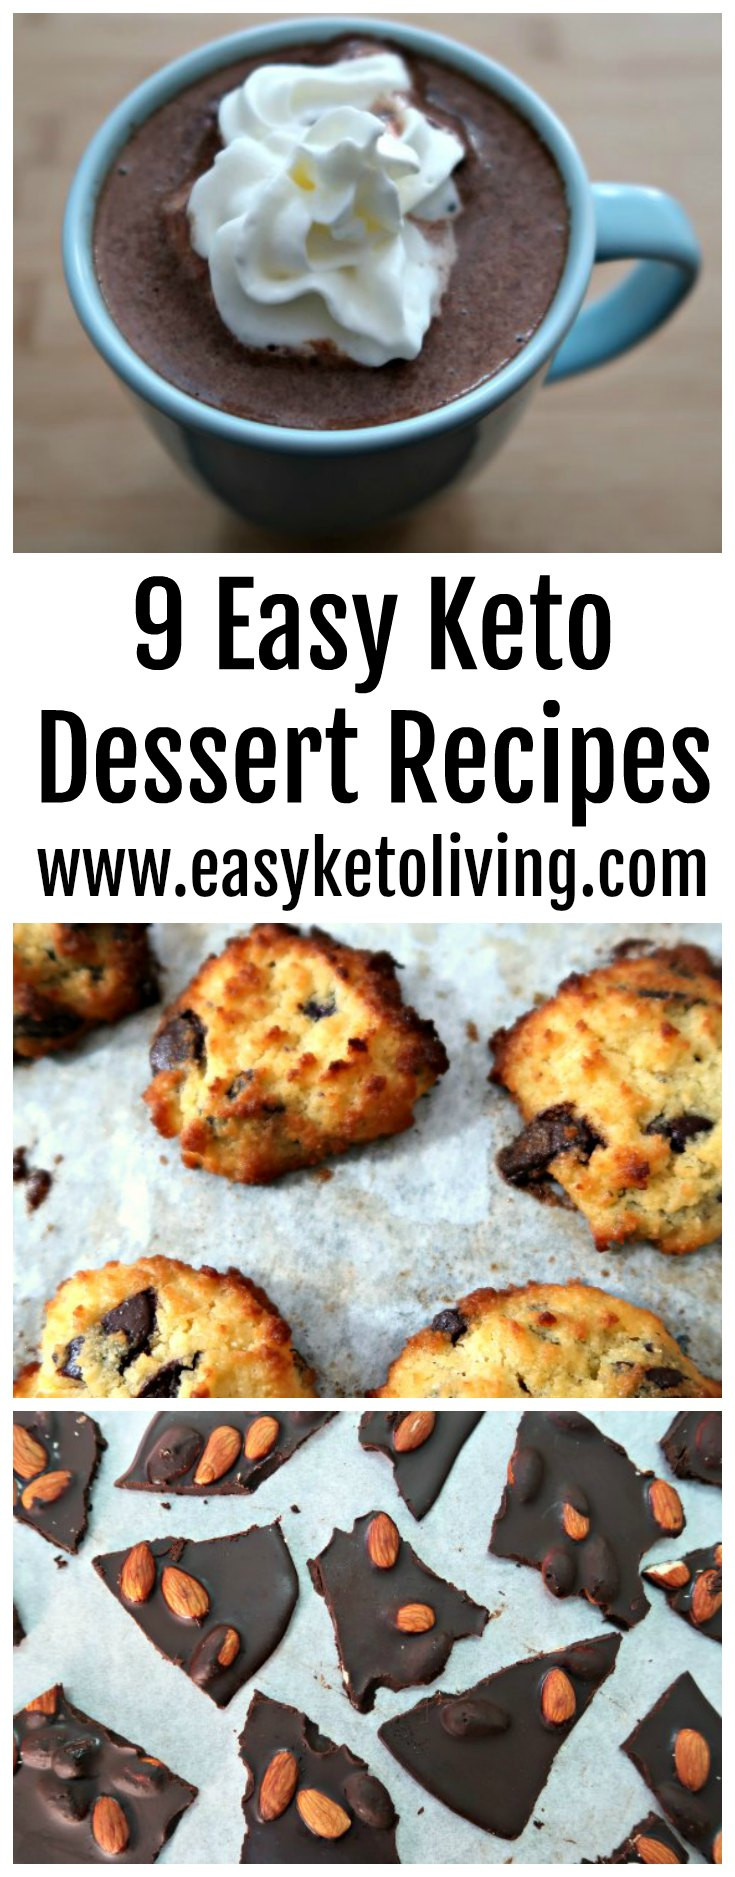 Low Carb Keto Desserts Easy Recipes
 9 Easy Keto Dessert Recipes Quick Low Carb Ketogenic